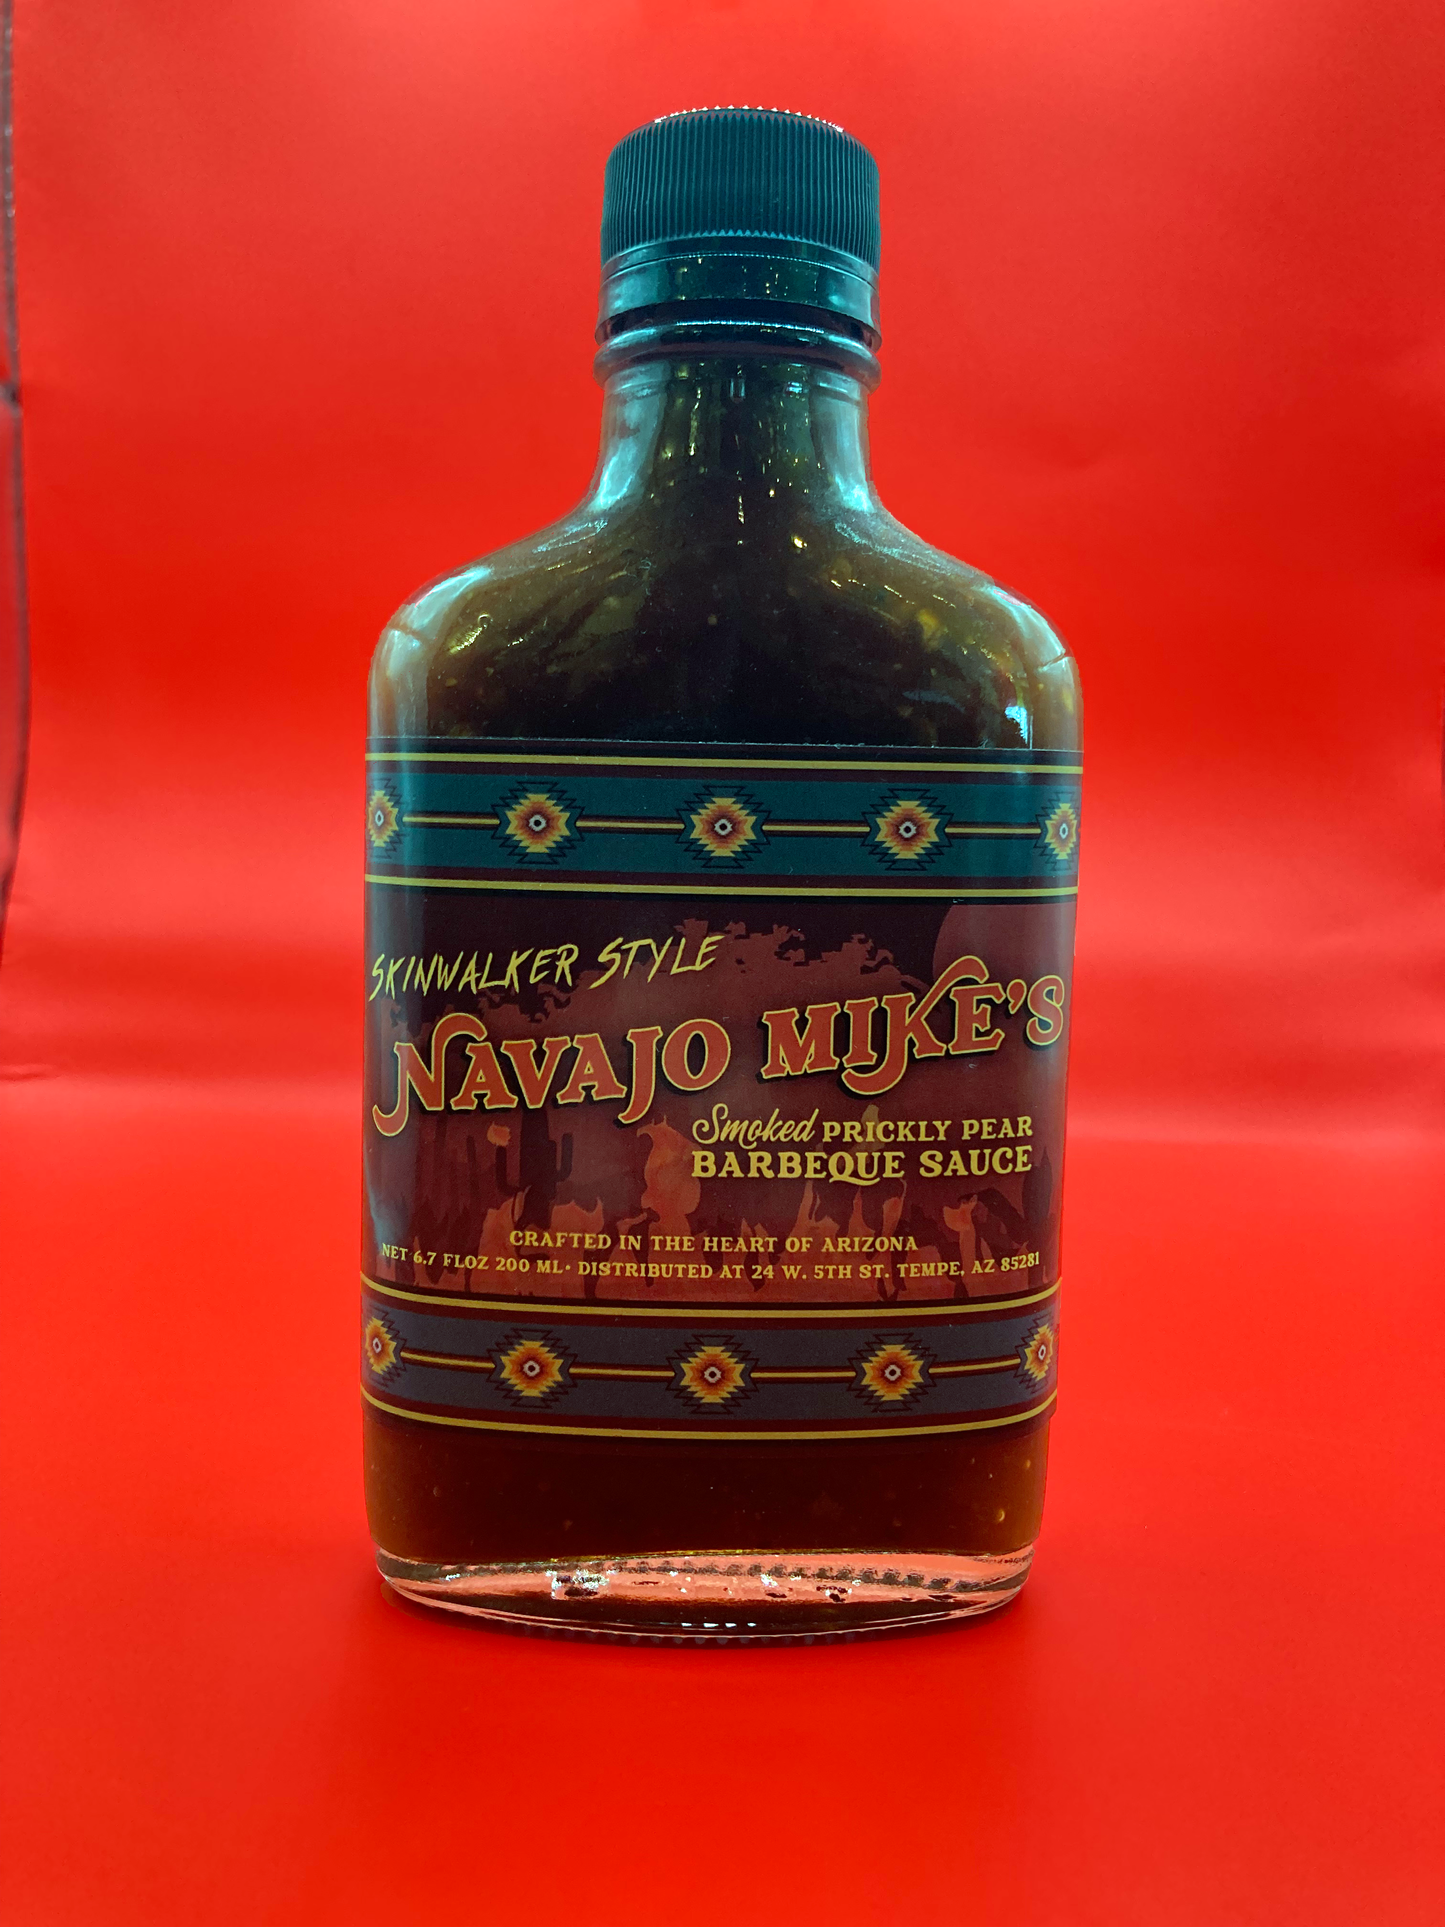 Navajo Mike's Skinwalker Style BBQ Sauce